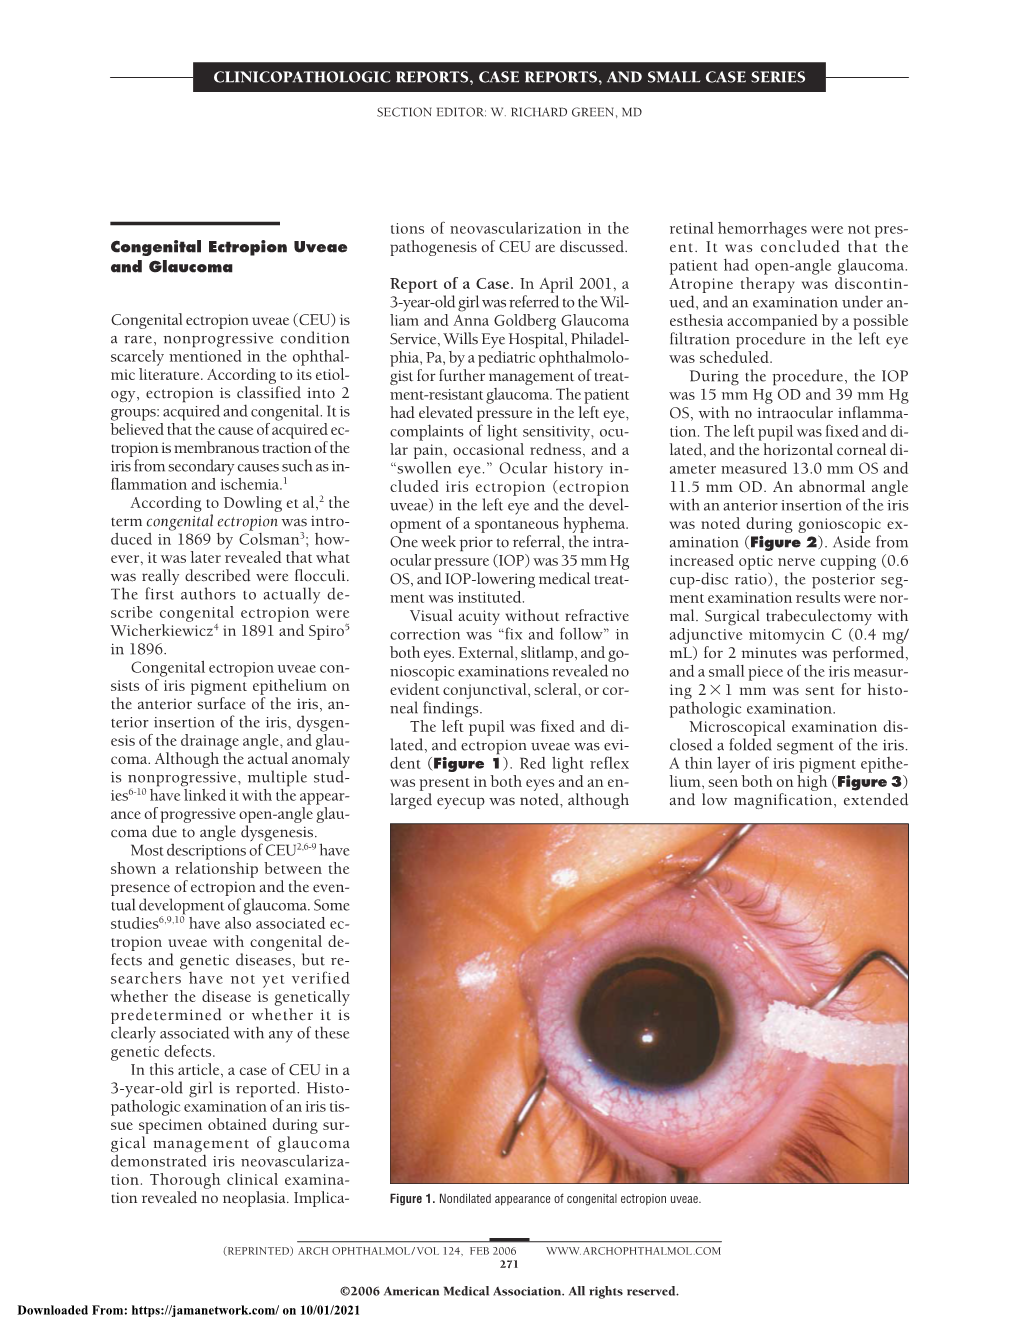 Congenital Ectropion Uveae and Glaucoma